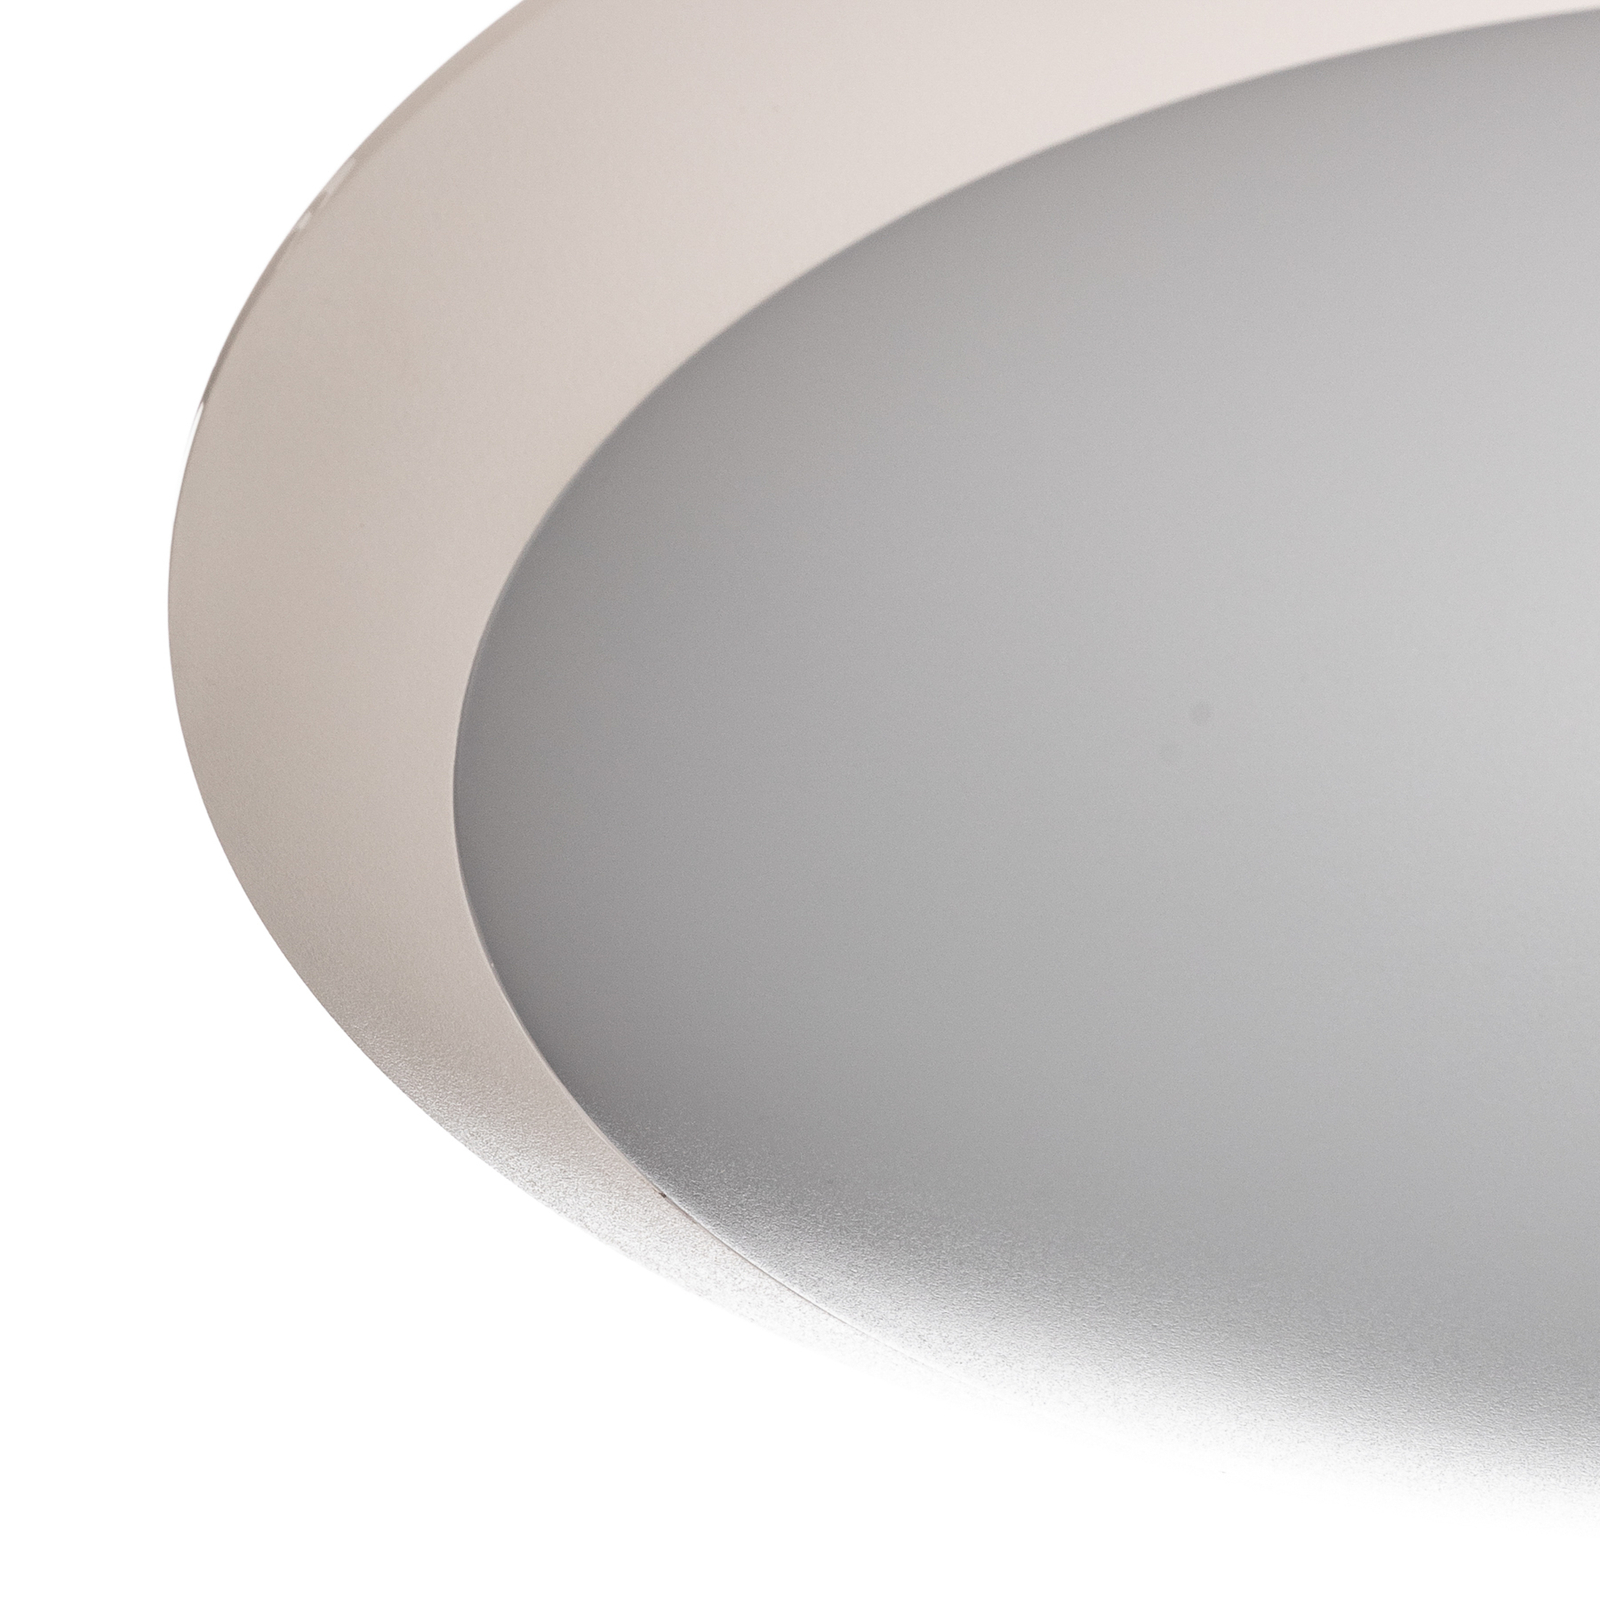 Lampa sufitowa LED Naira biała, bez czujnika